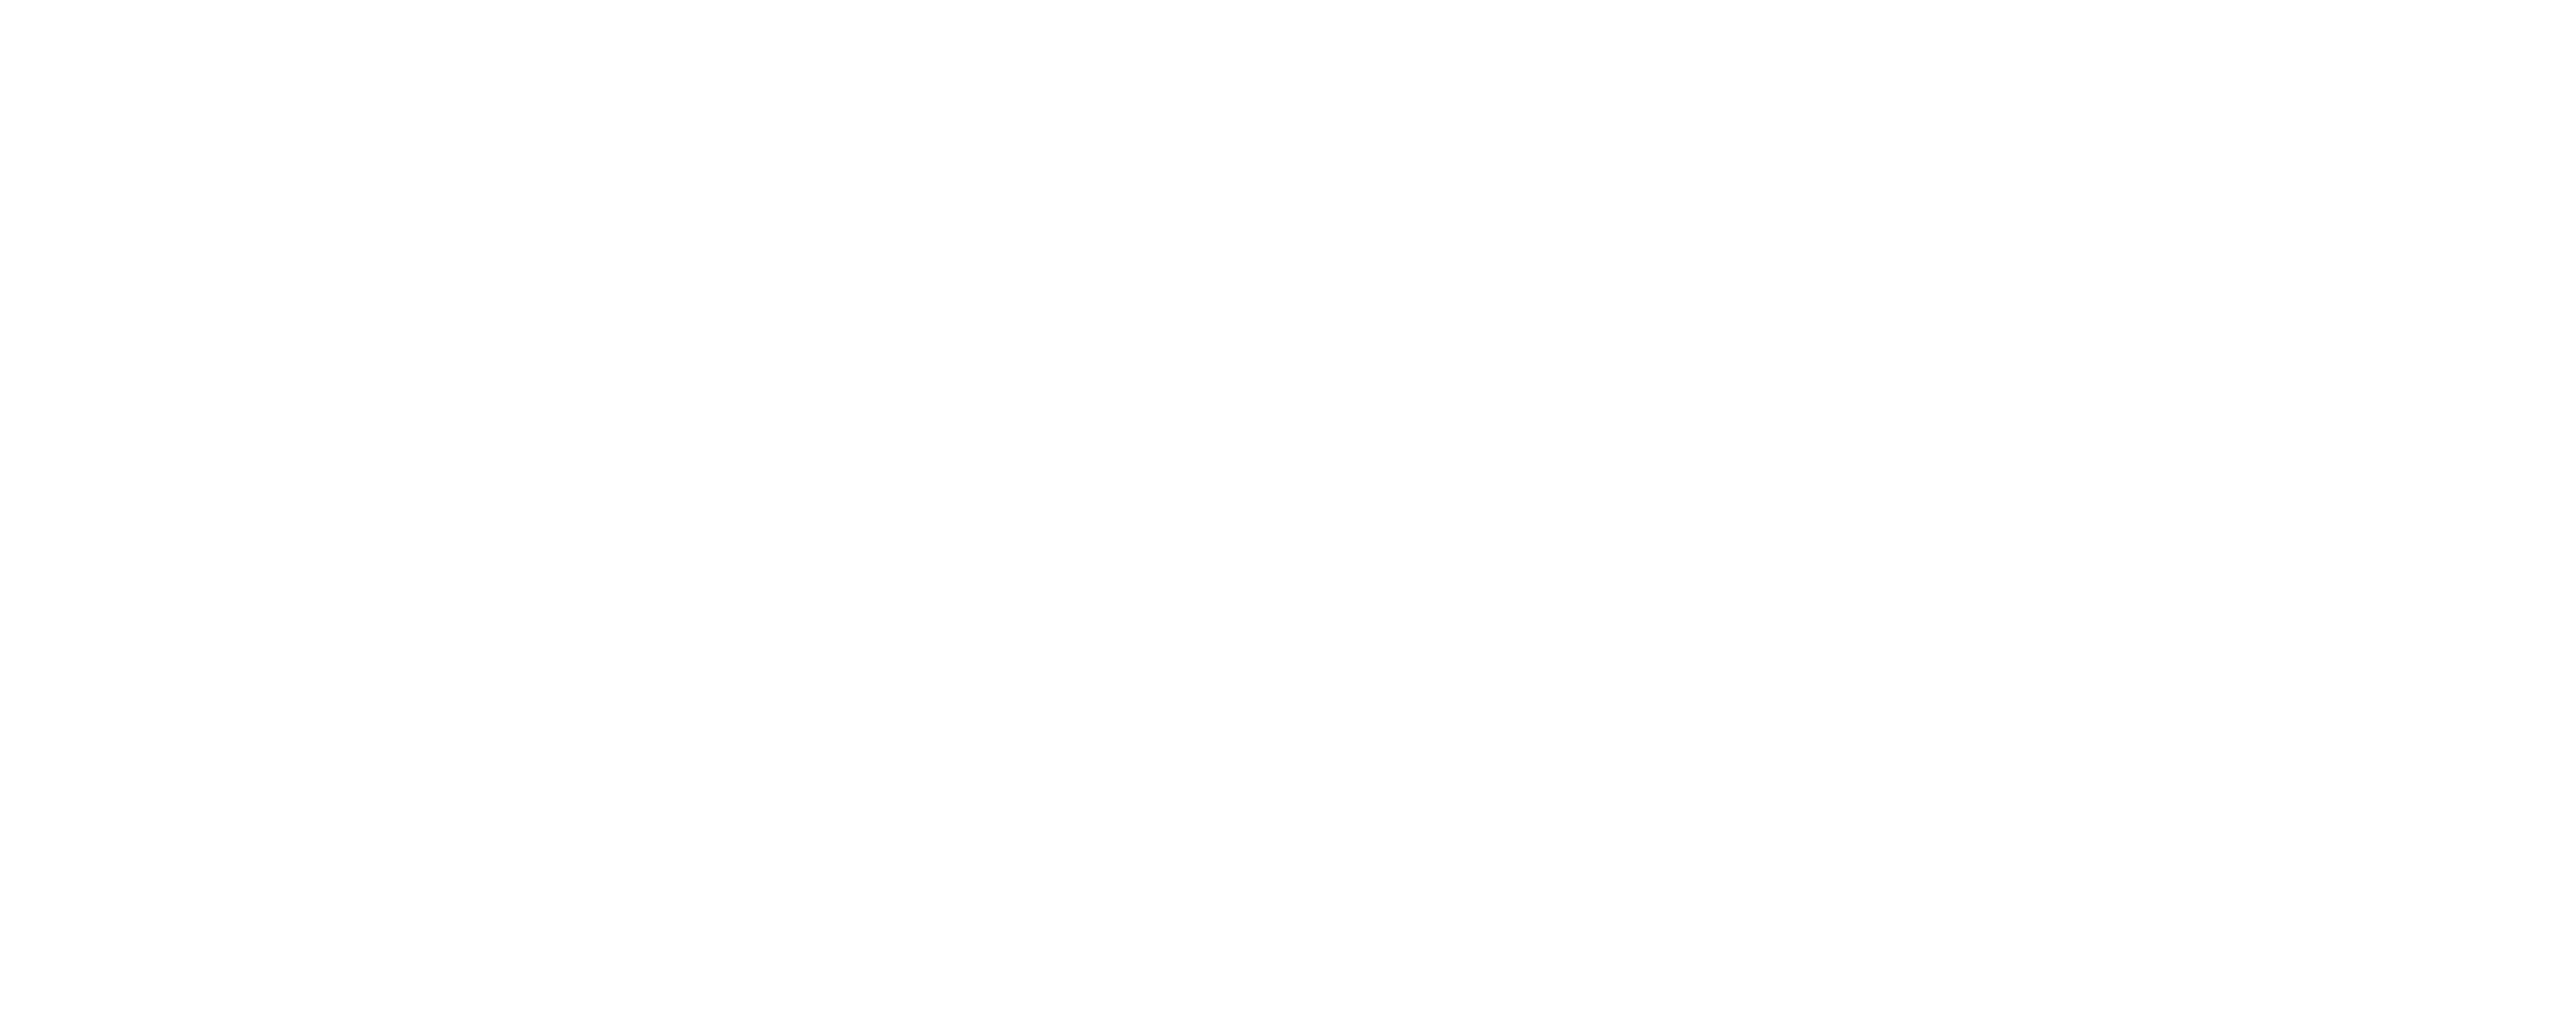  Logo Kaira Looro 2020 Emergency Operation center in Africa